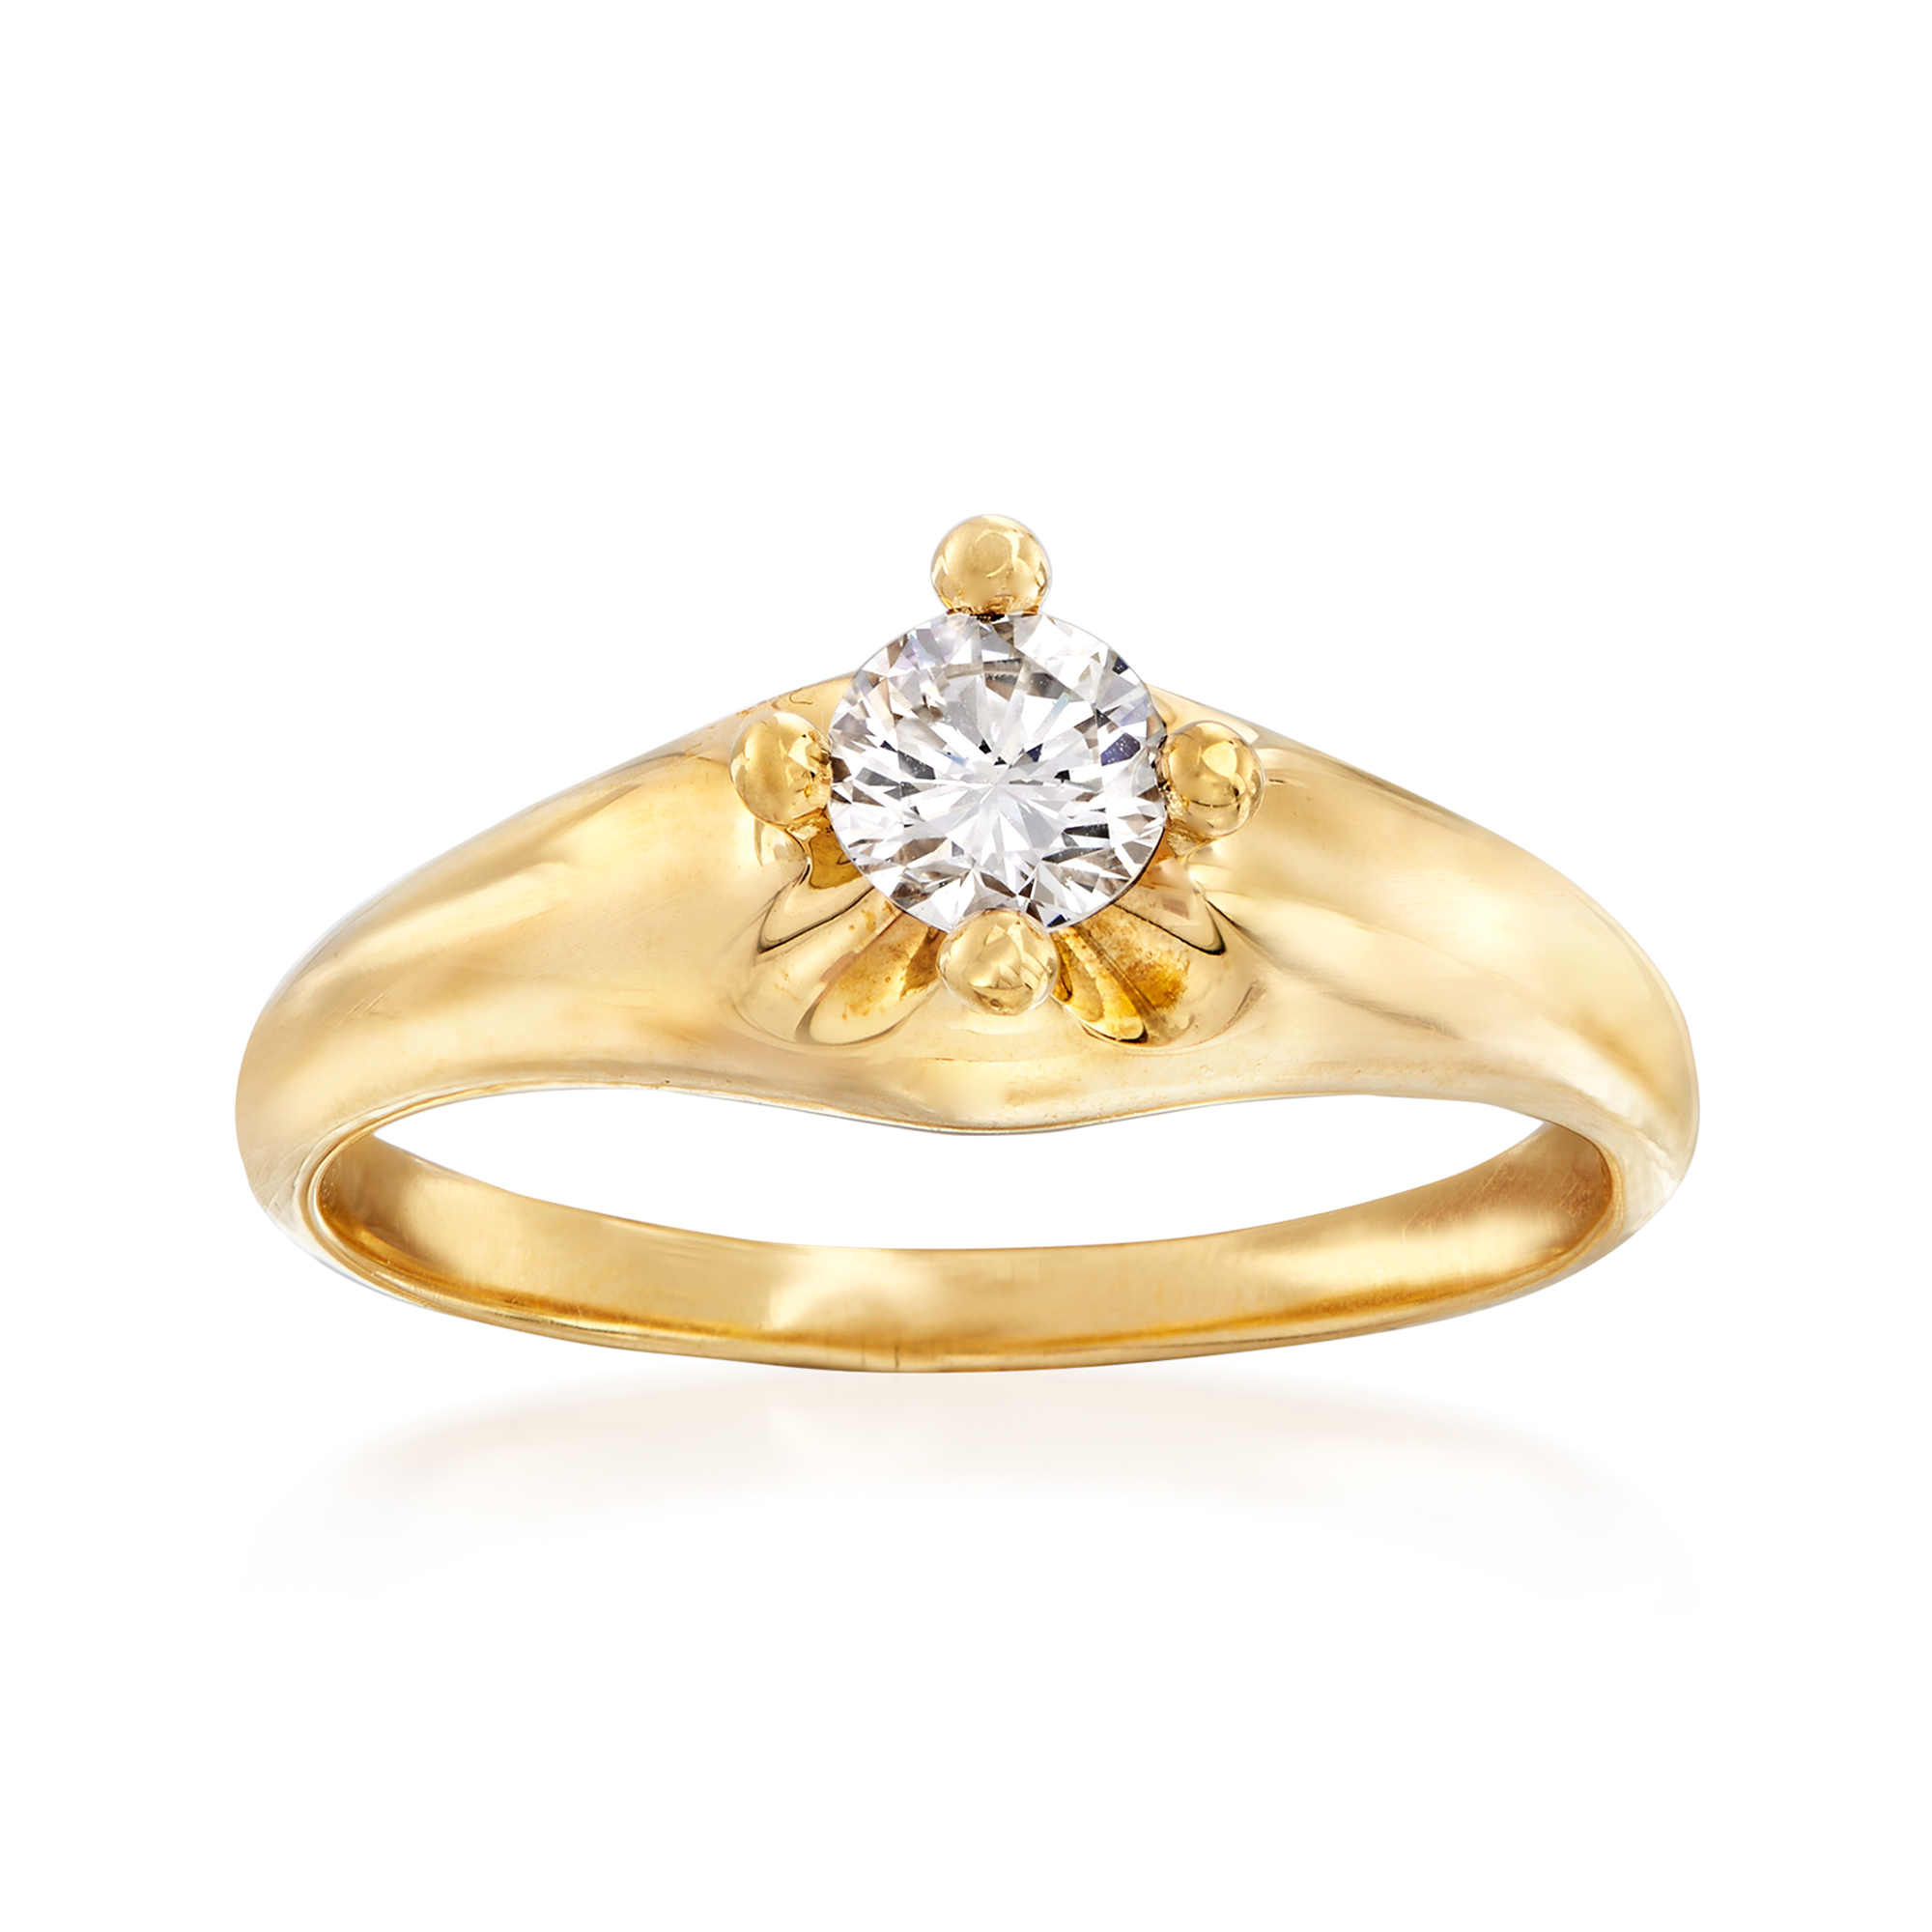 C. 1990 Vintage Bulgari .30 Carat Diamond Engagement Ring in 18kt Yellow  Gold | Ross-Simons